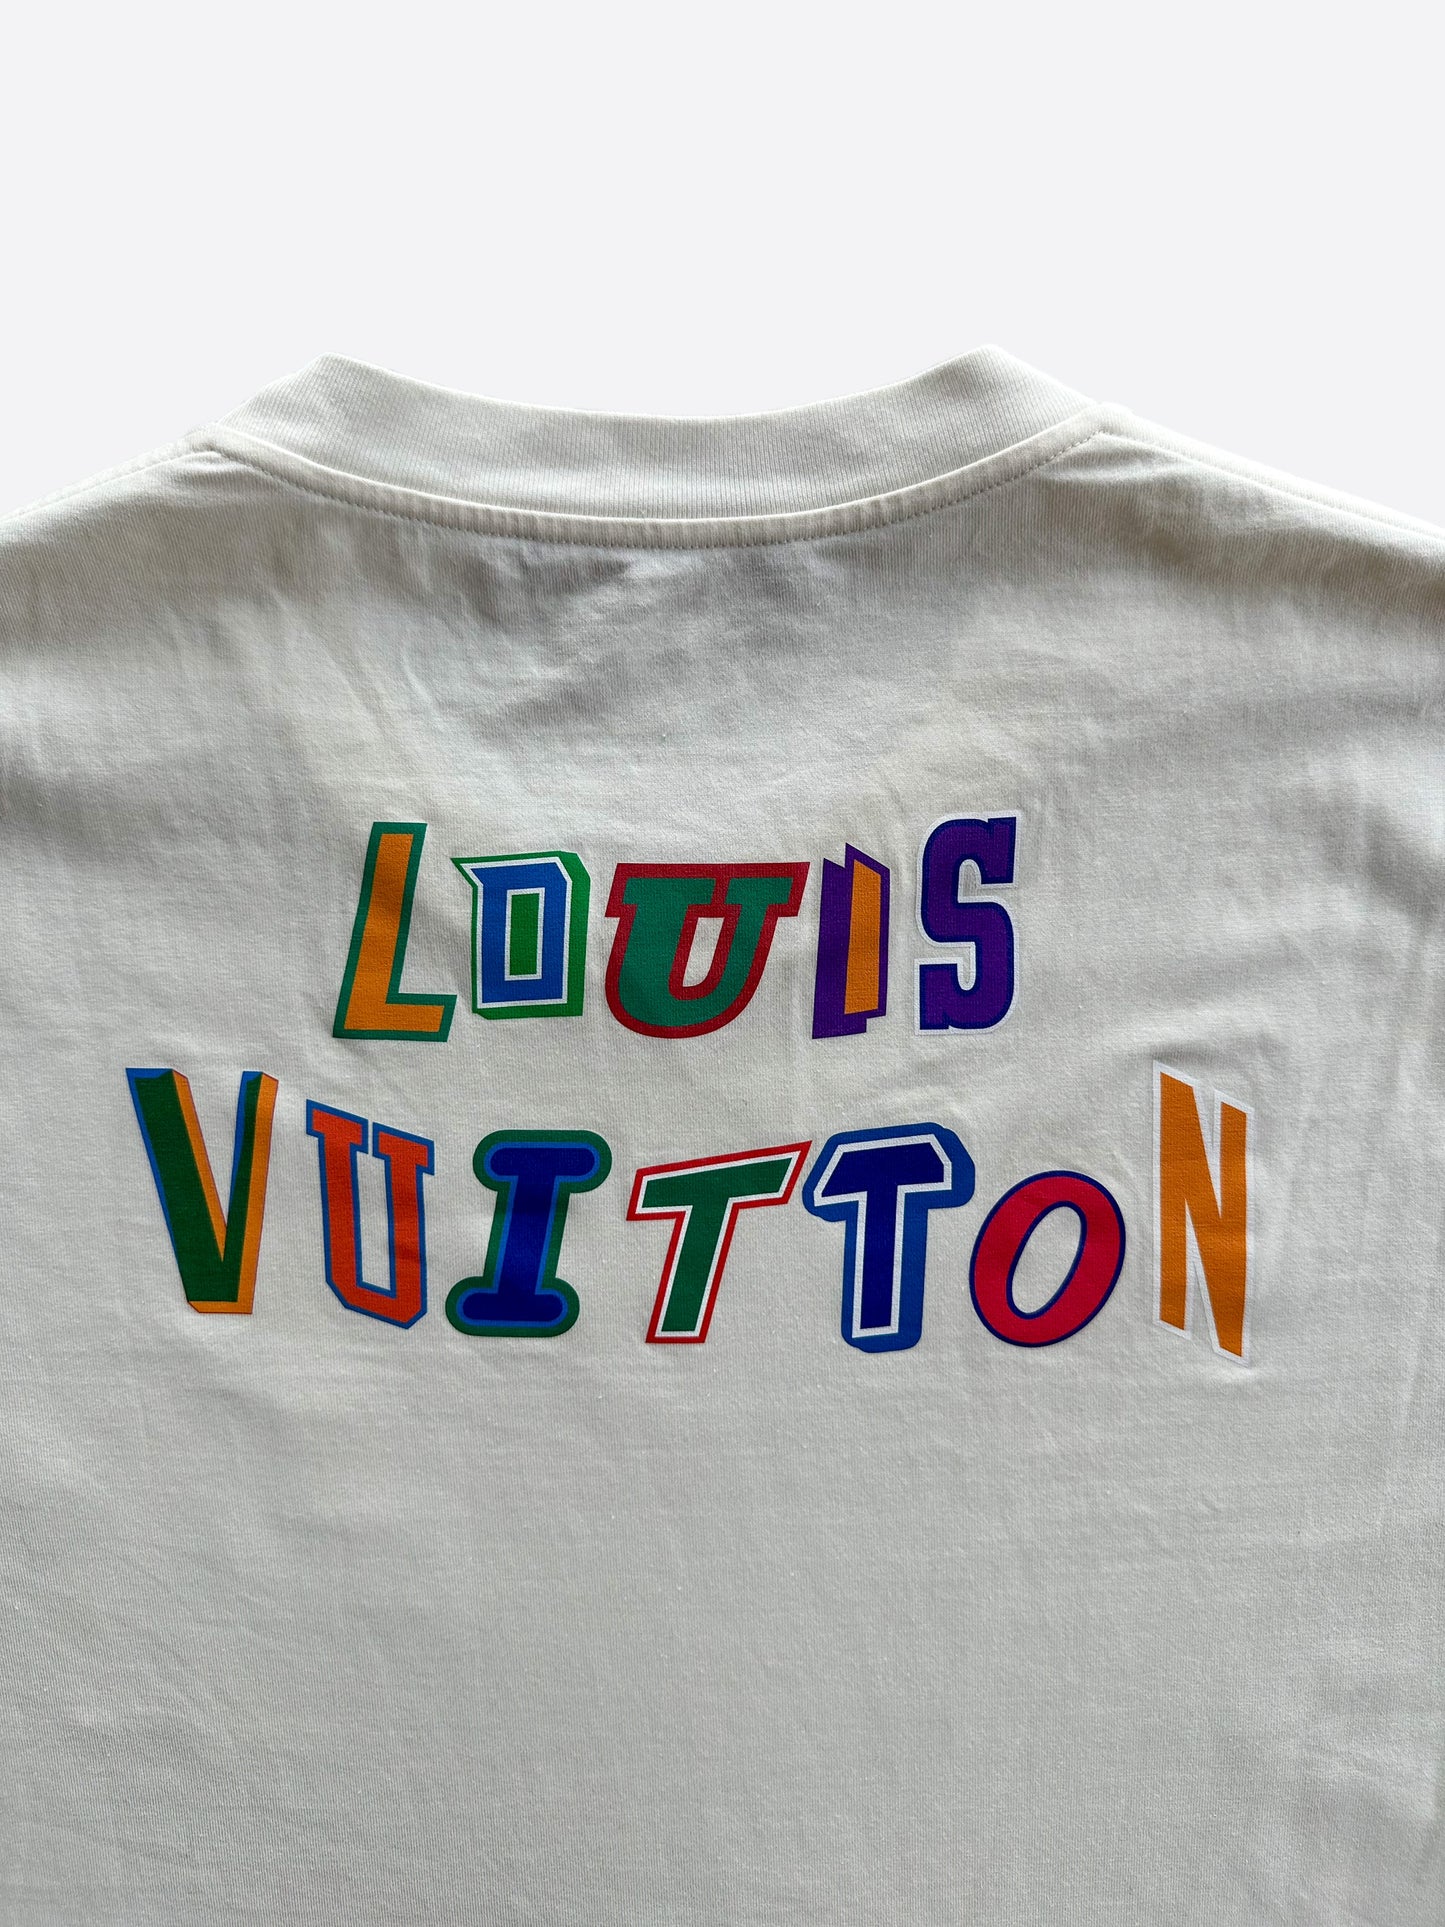 LOUIS VUITTON - NBA T SHIRT - WHITE